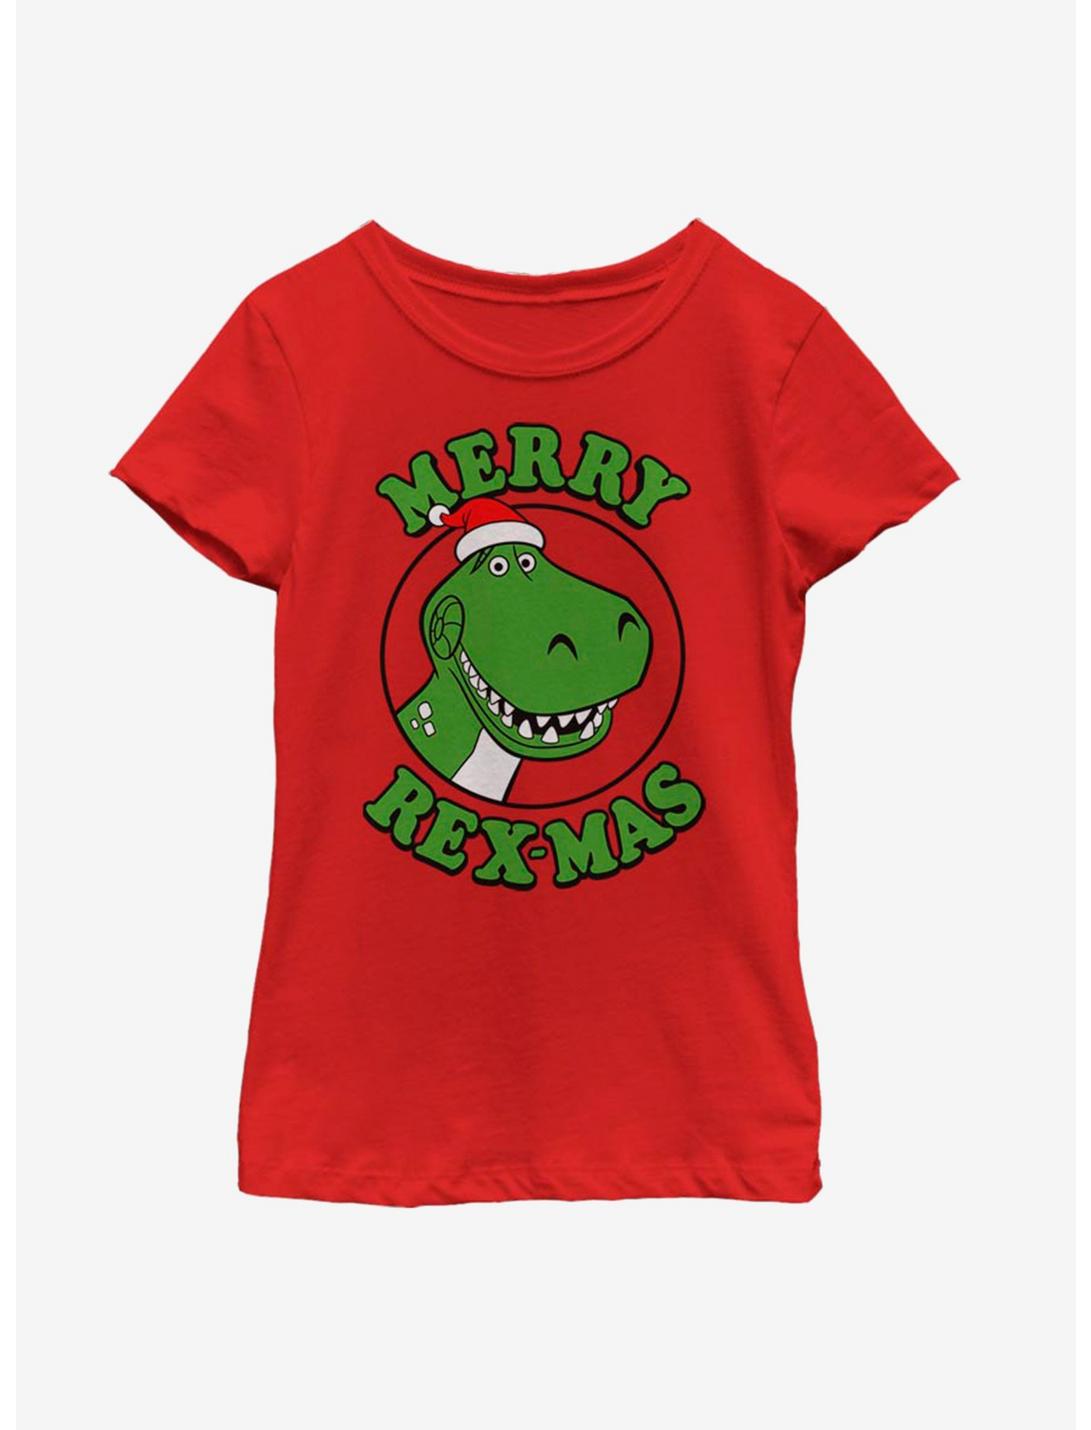 Disney Pixar Toy Story Merry Rexmas Youth Girls T-Shirt, RED, hi-res